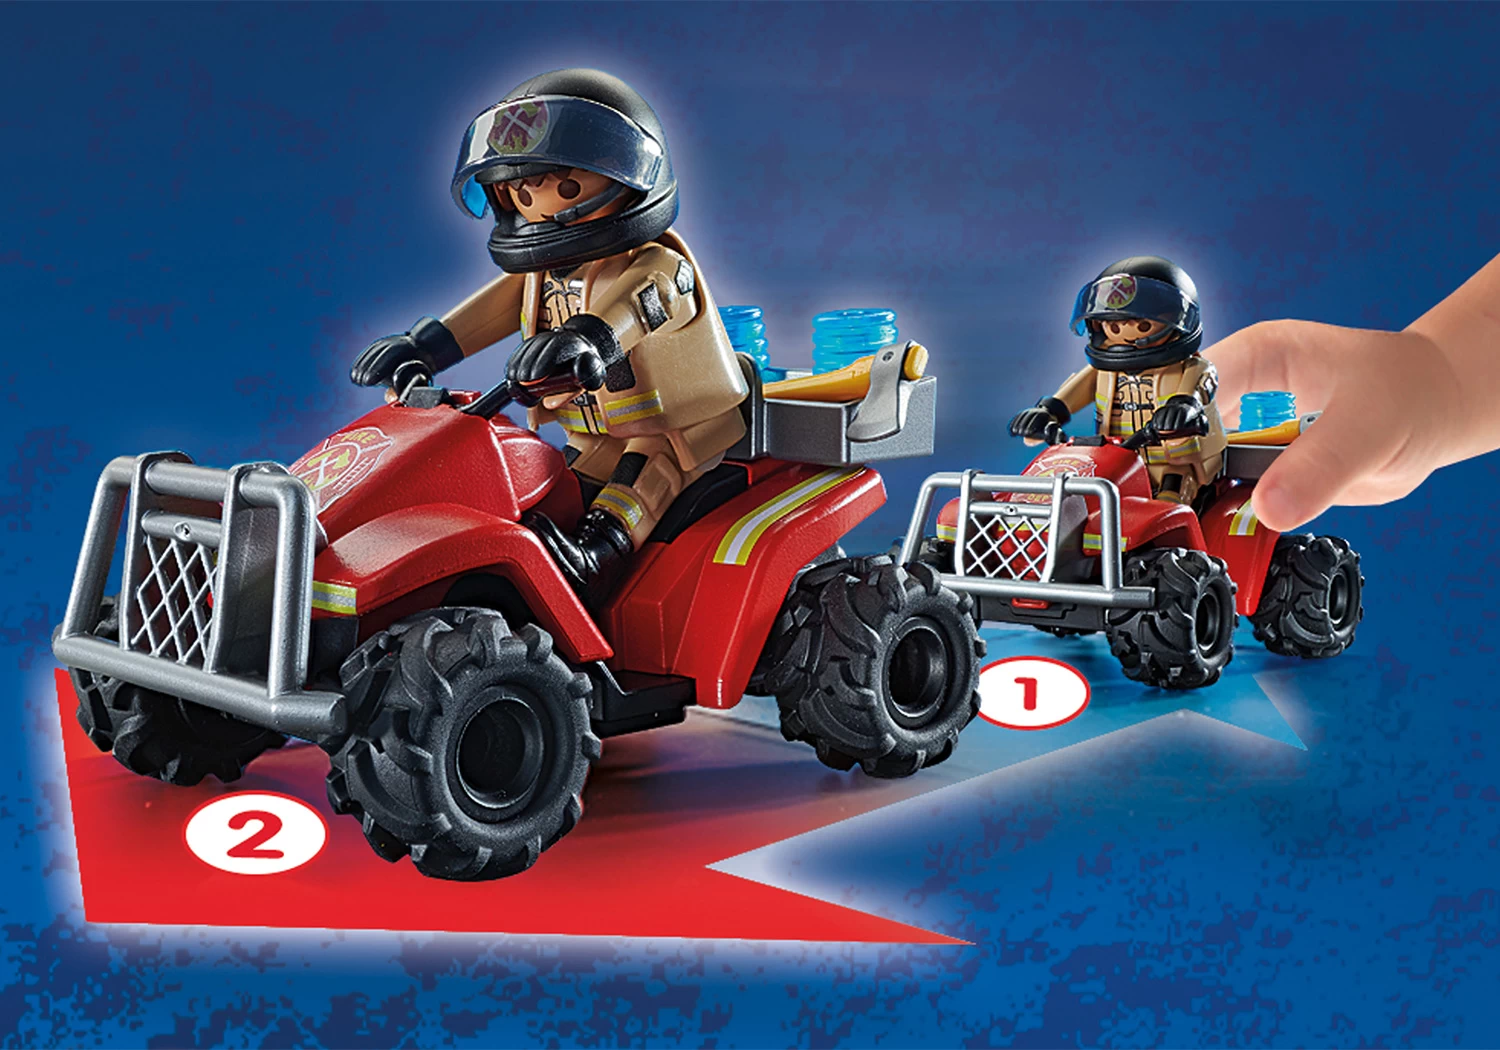 Playmobil 71090 - Feuerwehr Speed Quad - City Action